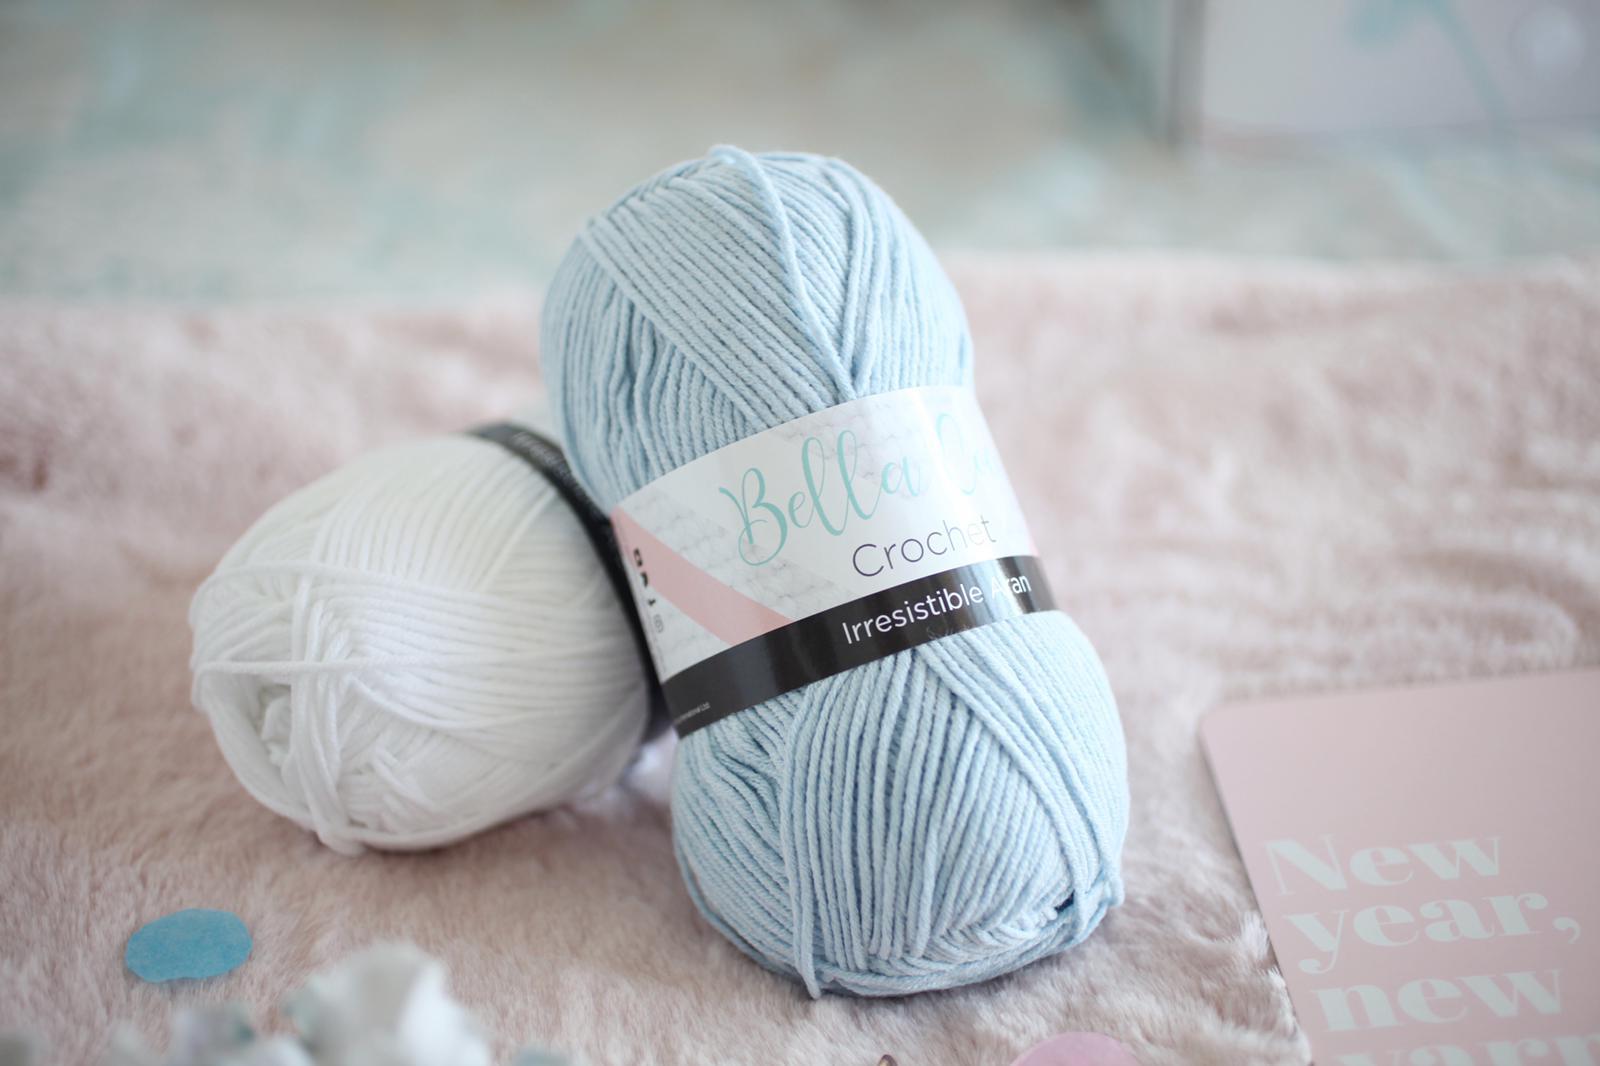 Bella coco crochet irresistibile aran yarn in polar and glacier